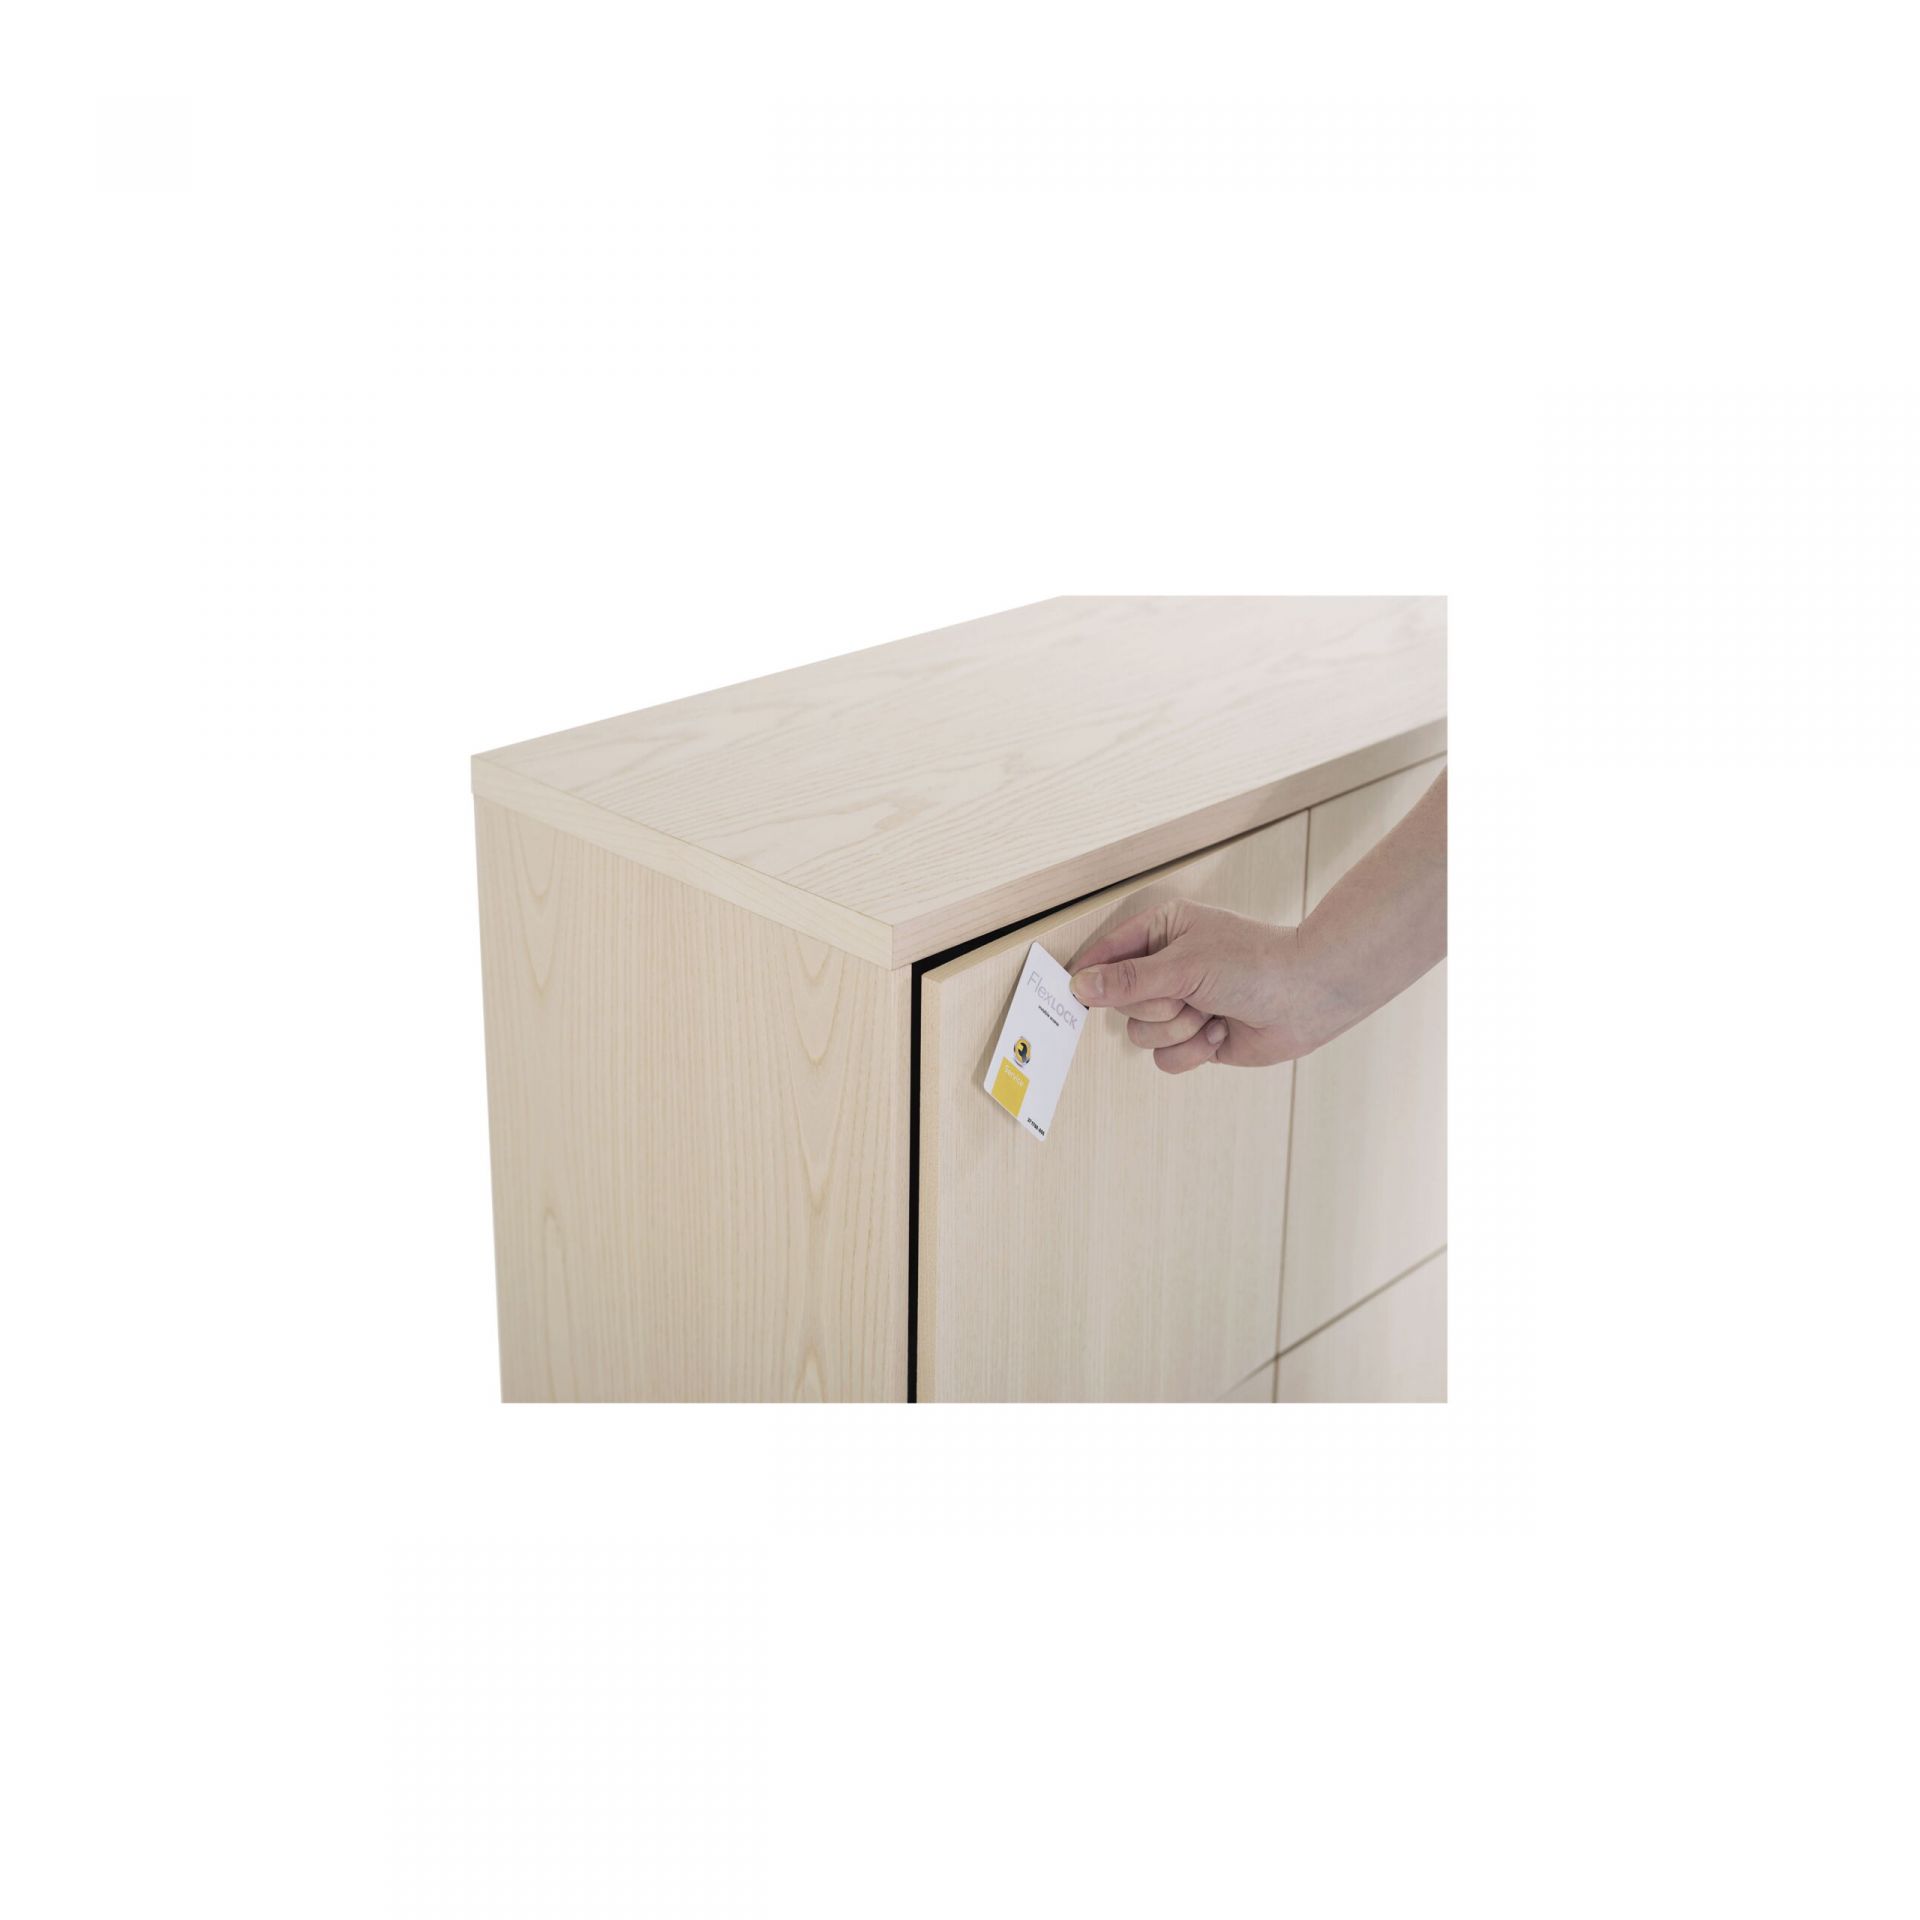 Pulse Personal locker product image 1